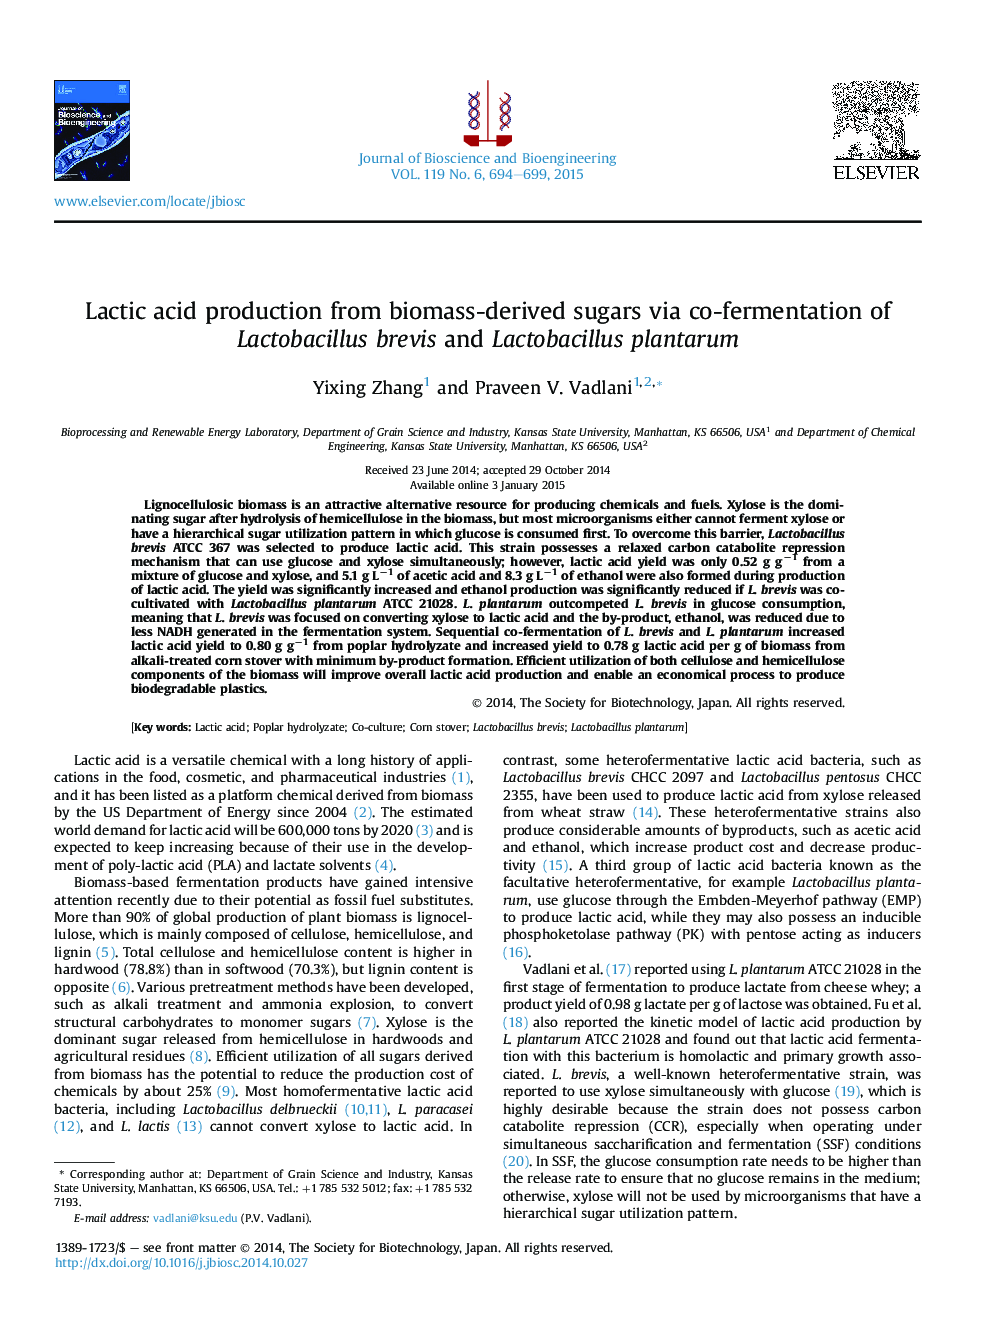 Lactic acid production from biomass-derived sugars via co-fermentation of Lactobacillus brevis and Lactobacillus plantarum